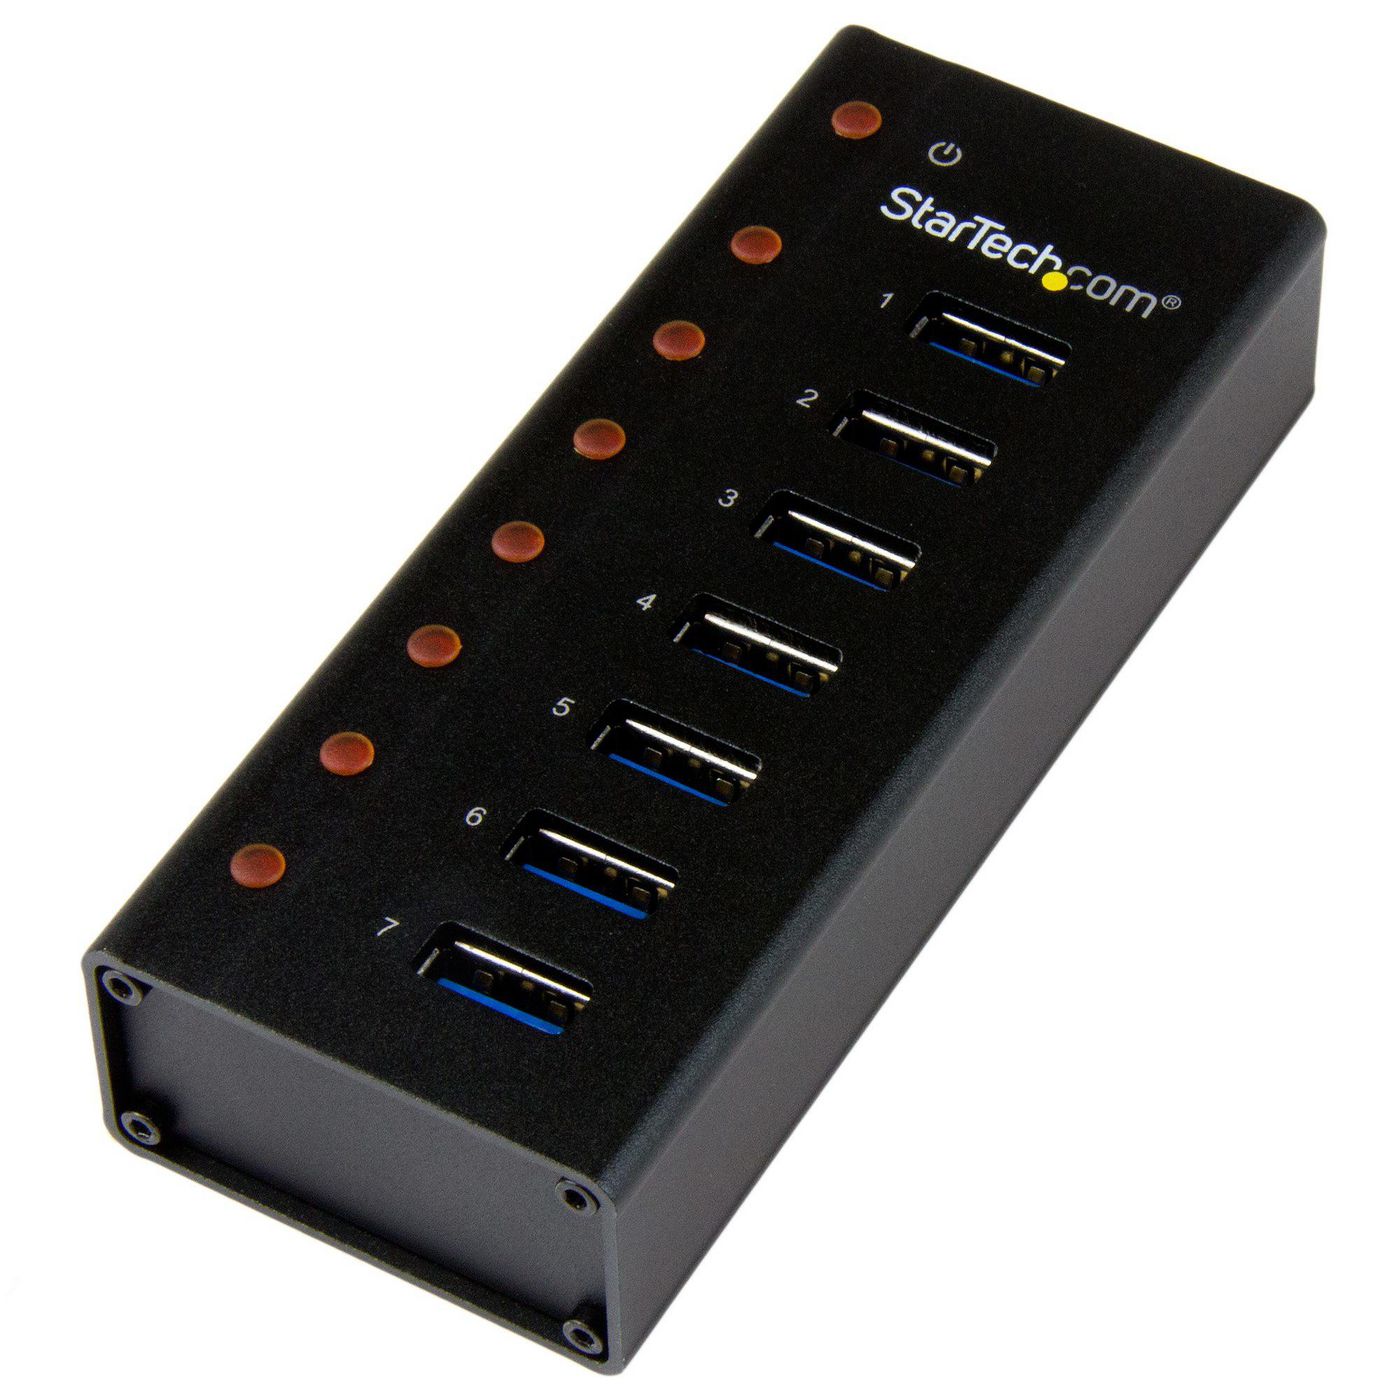 StarTechcom ST7300U3M 7 PORT USB 3.0 HUB - DESKTOP 